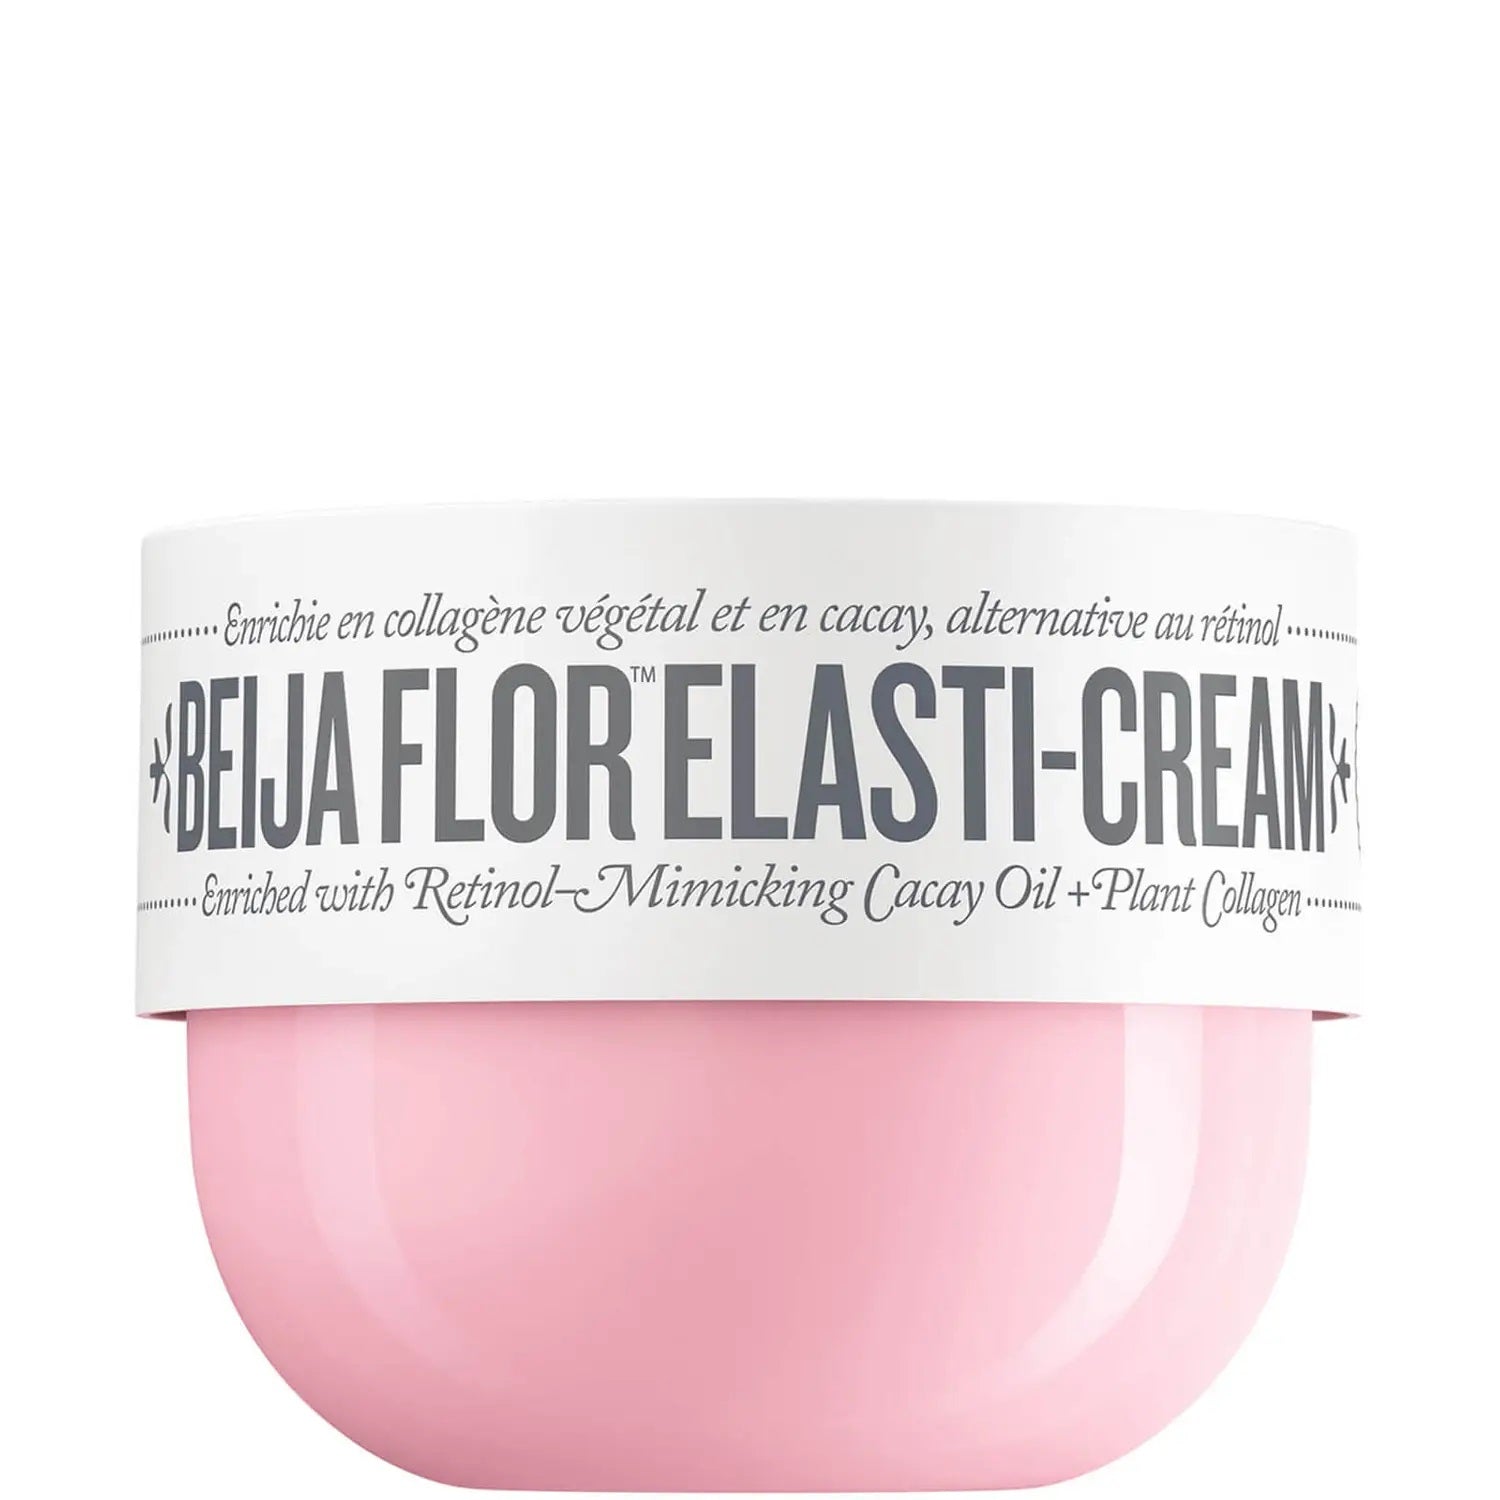 Sol de Janeiro Beija Flor Elasti-Cream 240ml Grace Beauty